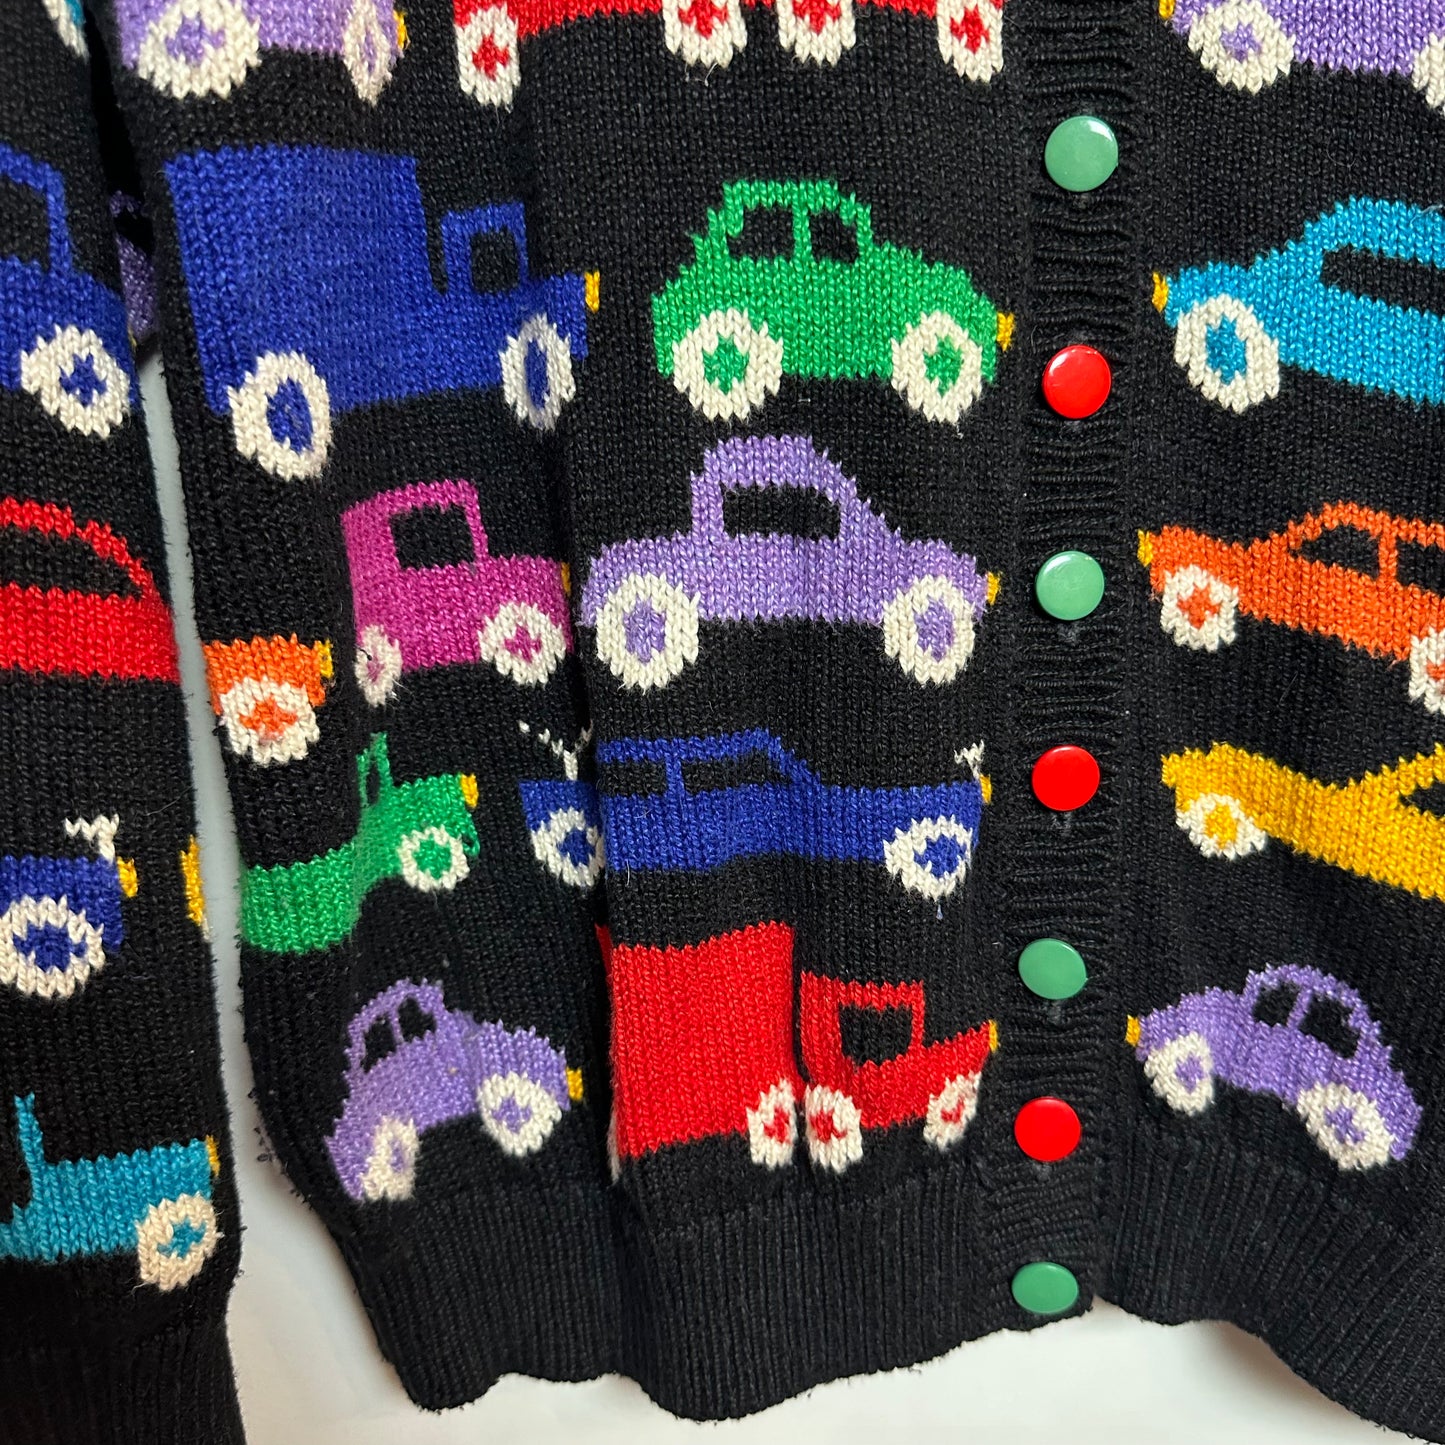 Vintage 90s Christine Foley Cars Cardigan Sweater Colorful Rainbow Chunky Knit